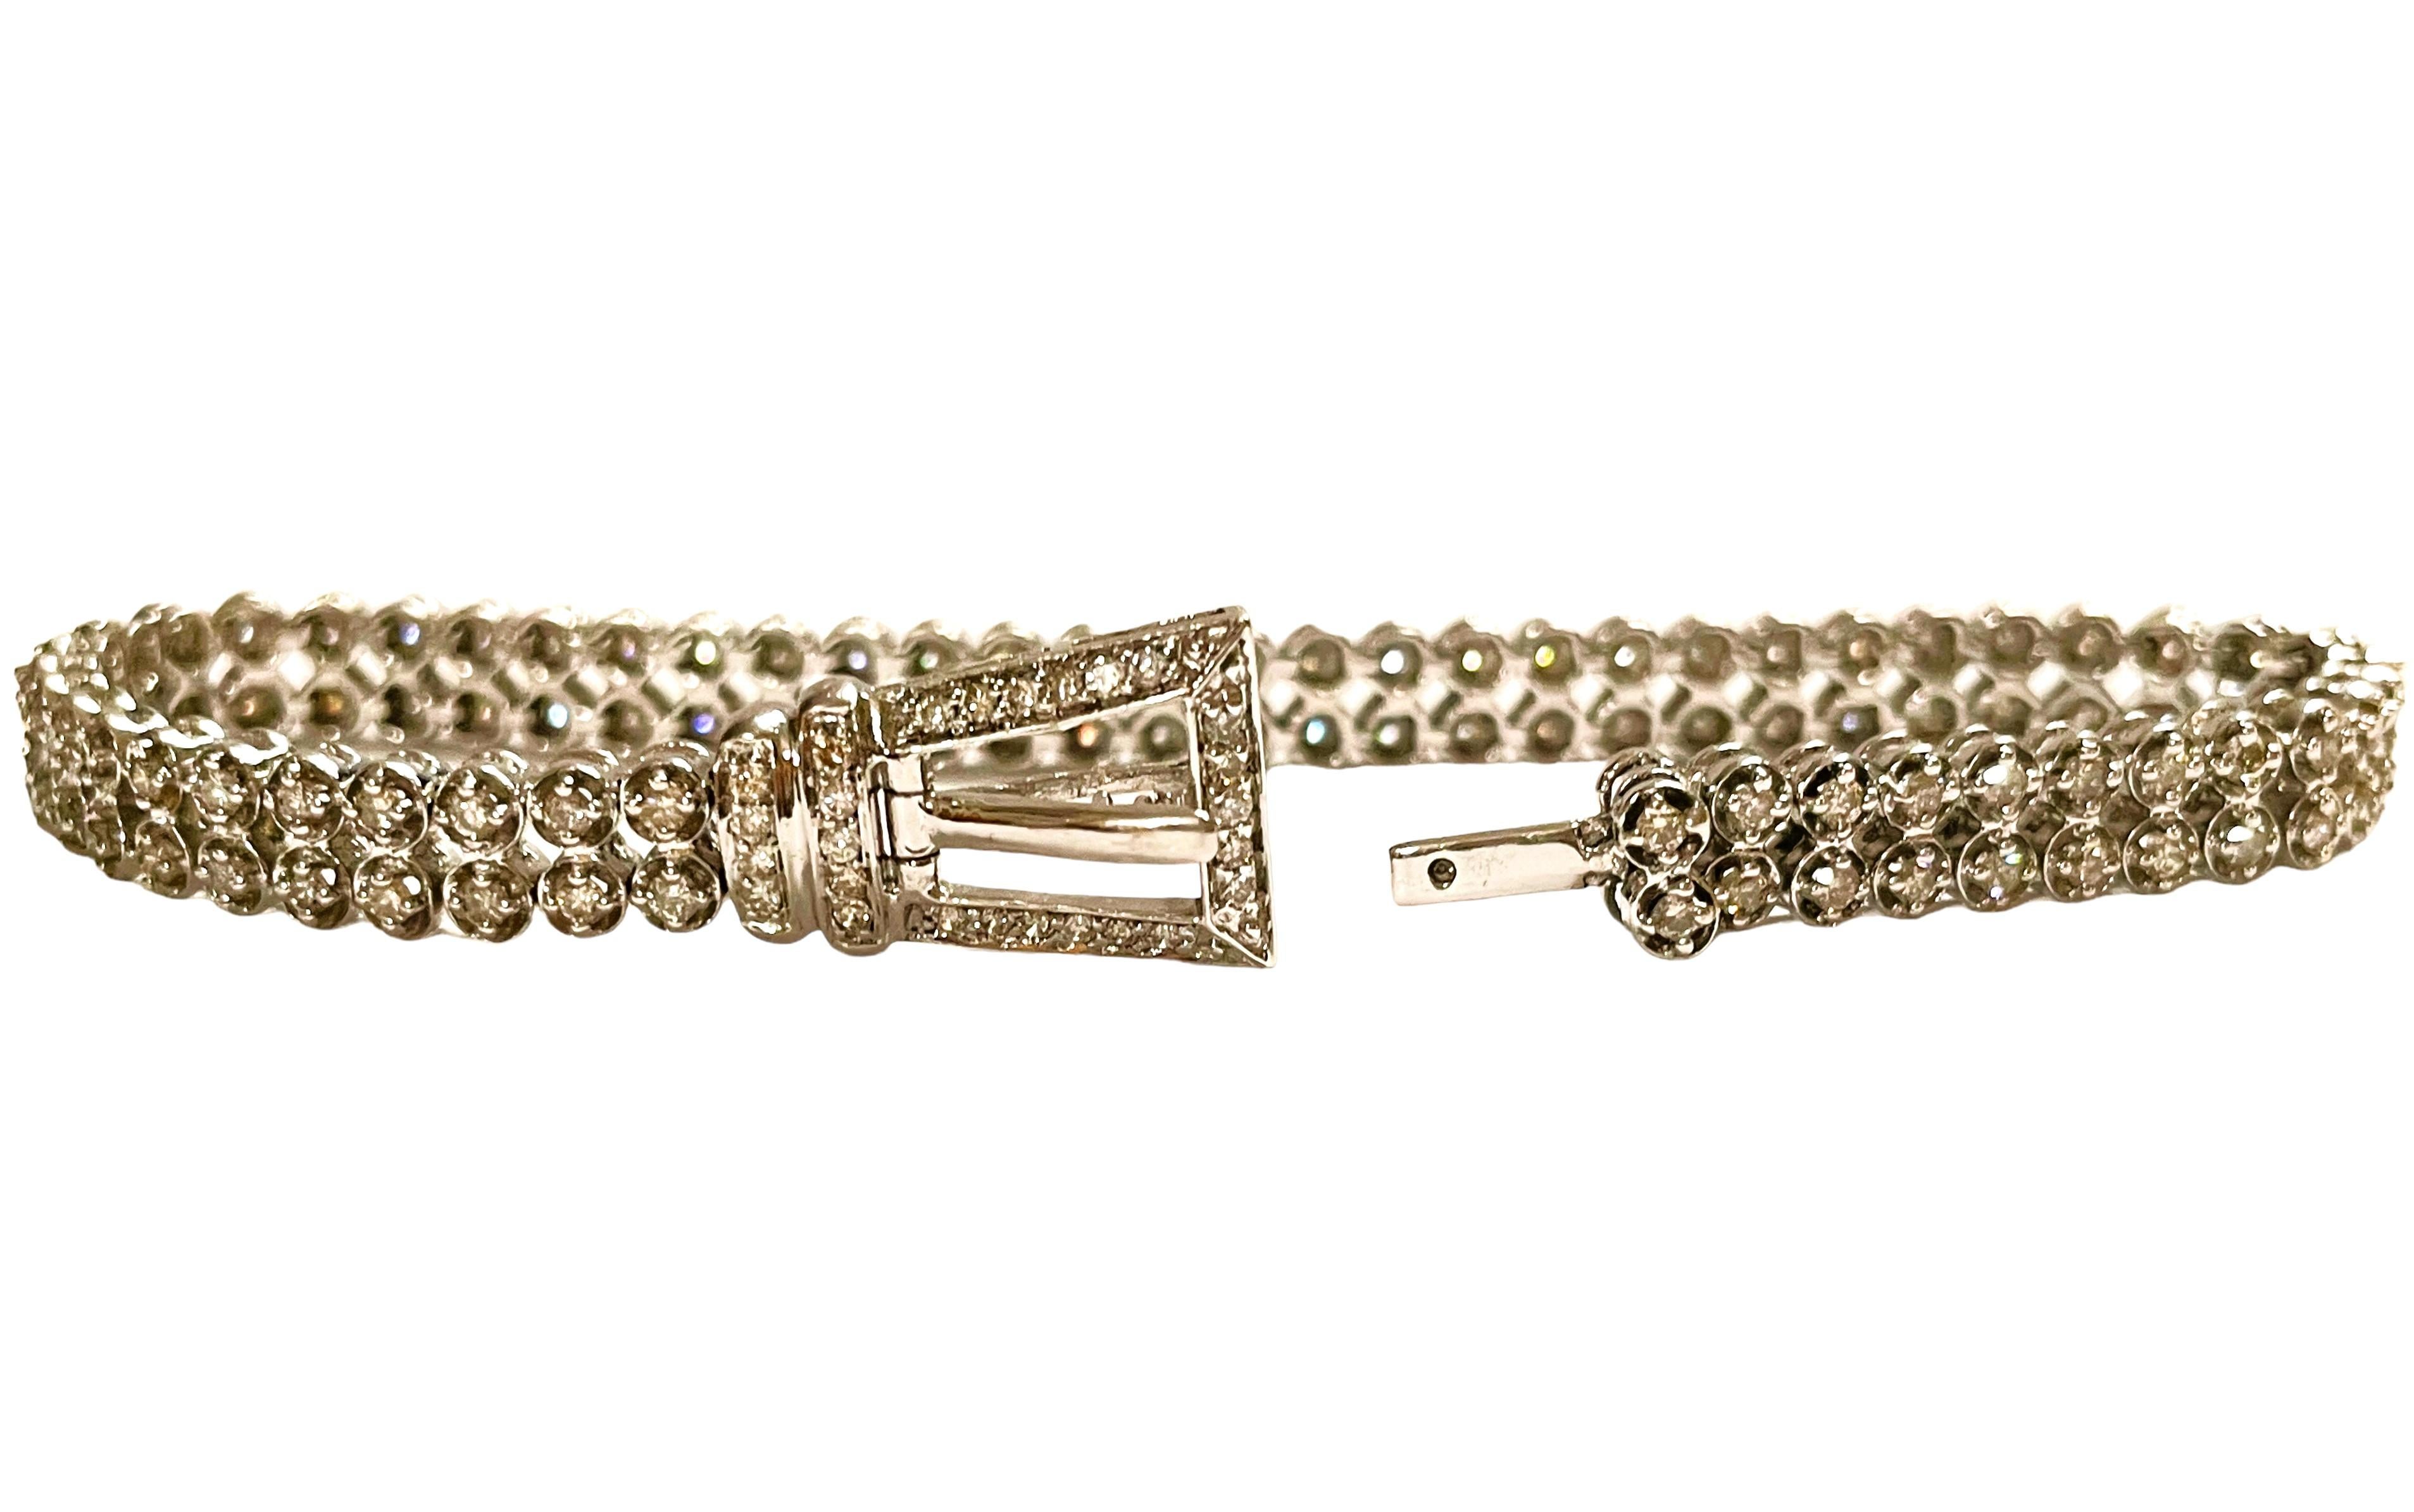 Art Deco Vintage Handmade 14k White Gold 2 Carat Diamond Buckle Bracelet with Appraisal